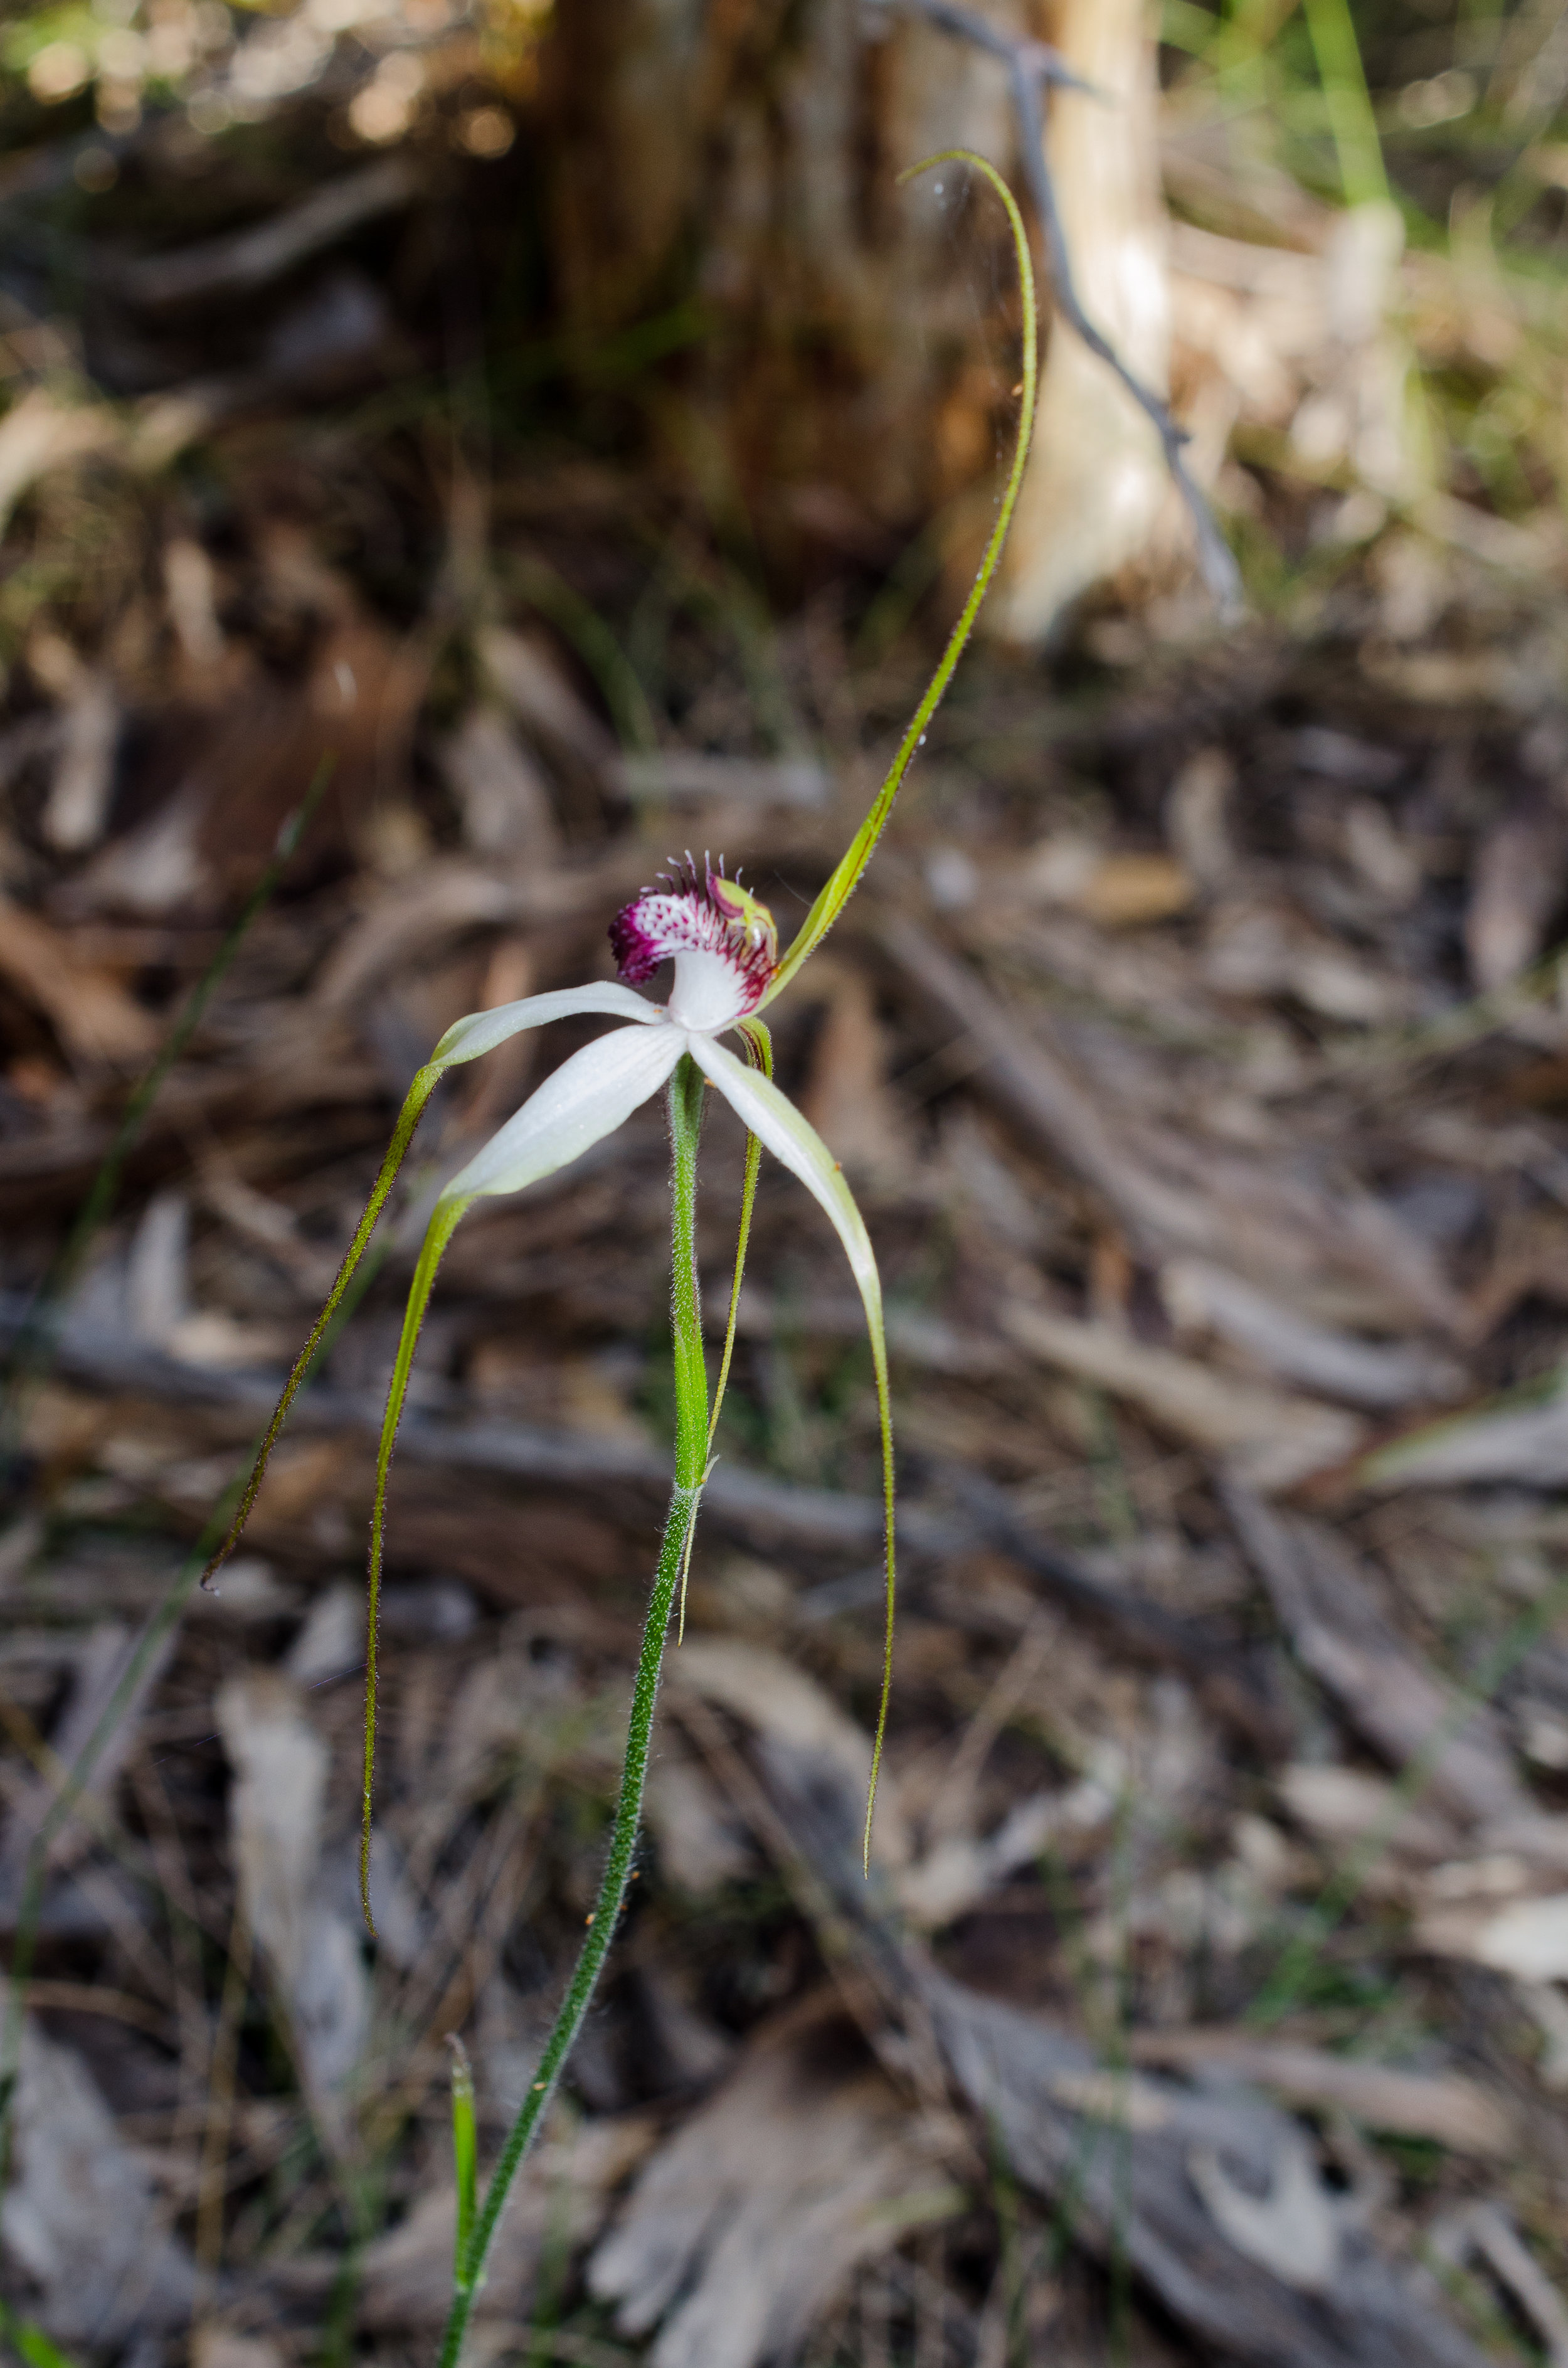  Caladenia huegelii - Grand spider orchid, Stirling Range NP 